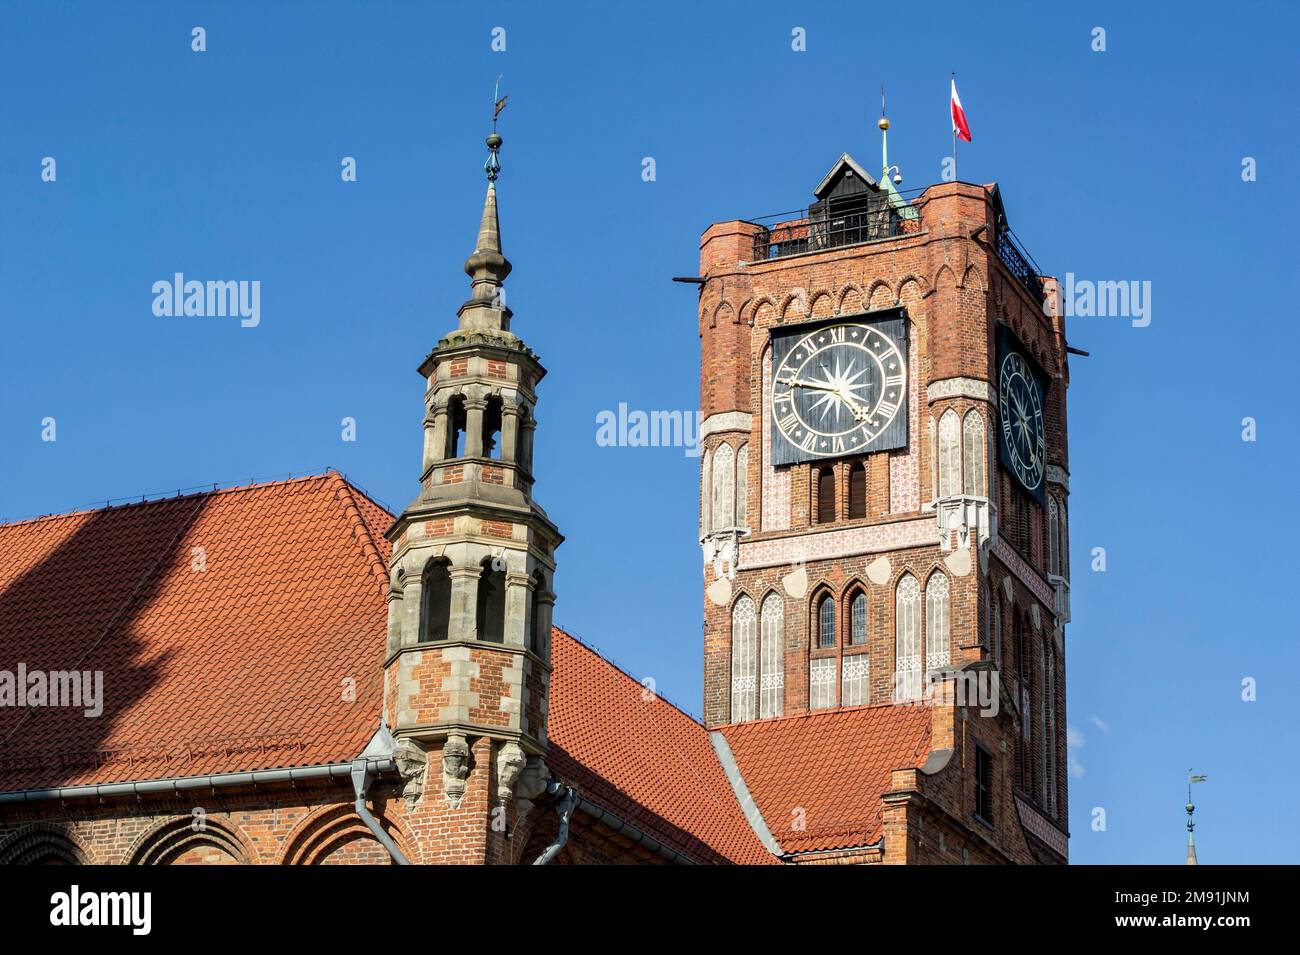 Torun town hall of Ratusz Staromiejski clock tower from 18th century with Polish flag in Poland Stock Photo